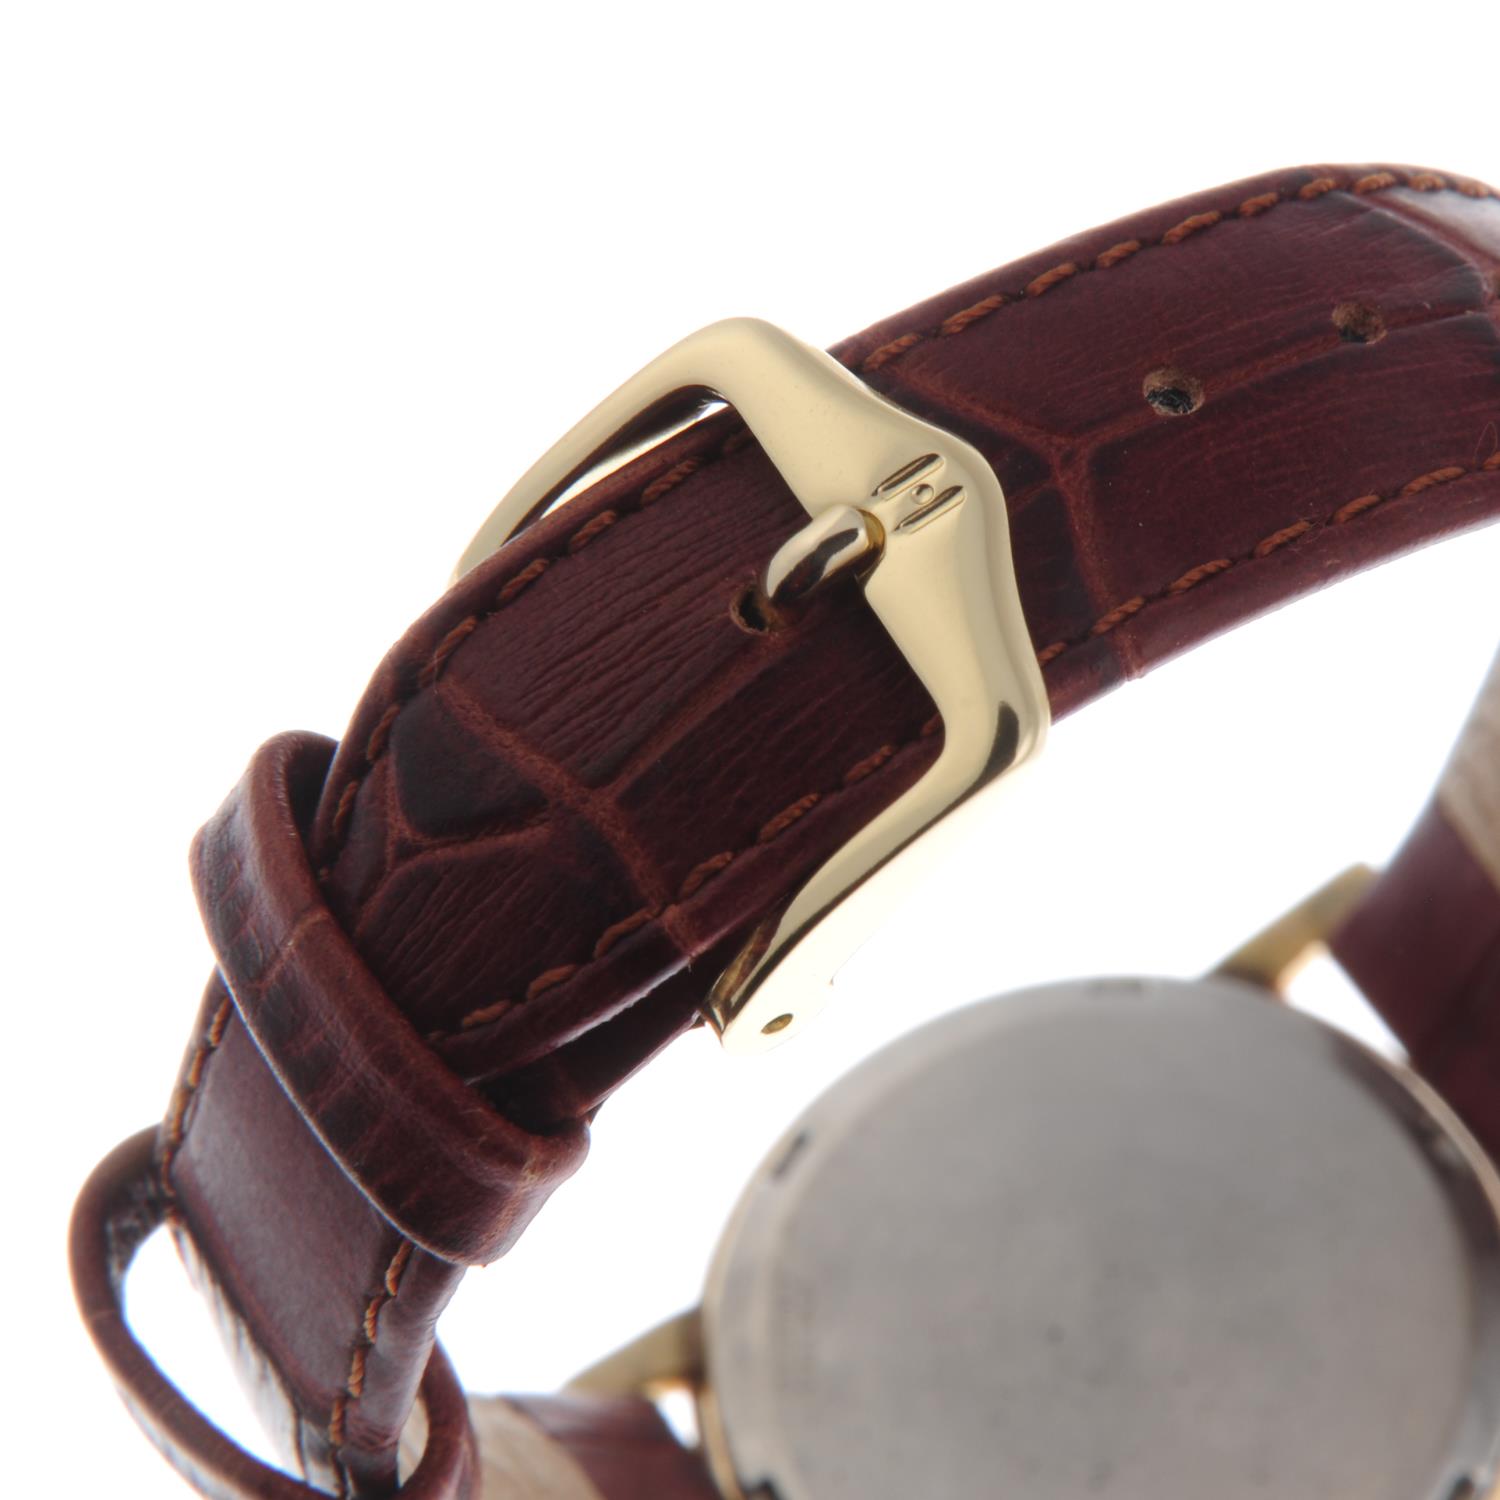 OMEGA - a gentleman's wrist watch. - Image 2 of 4